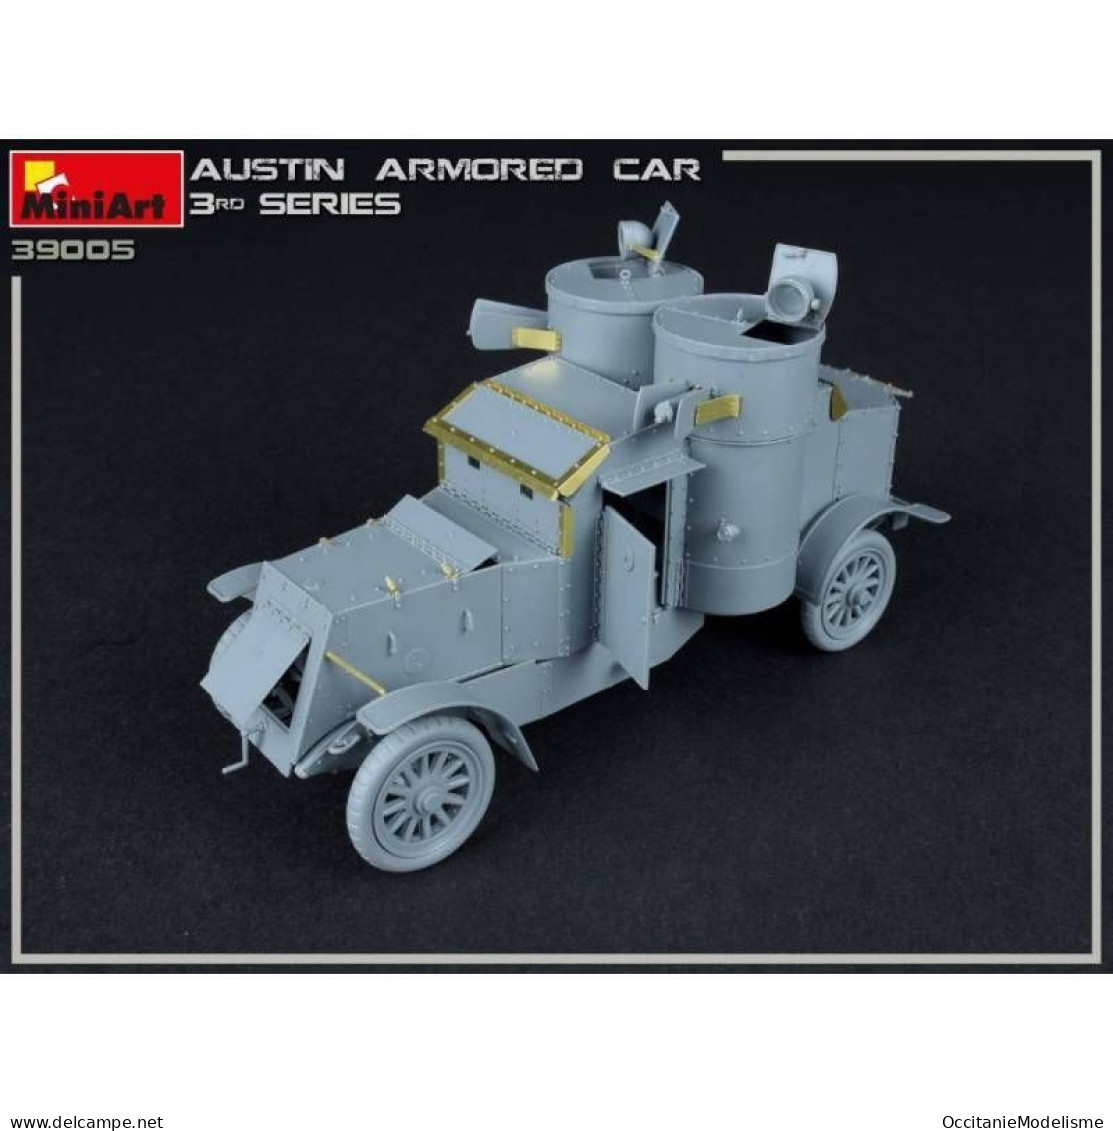 Miniart - AUSTIN ARMOURED CAR 3rd Series Maquette Kit Plastique Réf. 39005 Neuf NBO 1/35 - Veicoli Militari